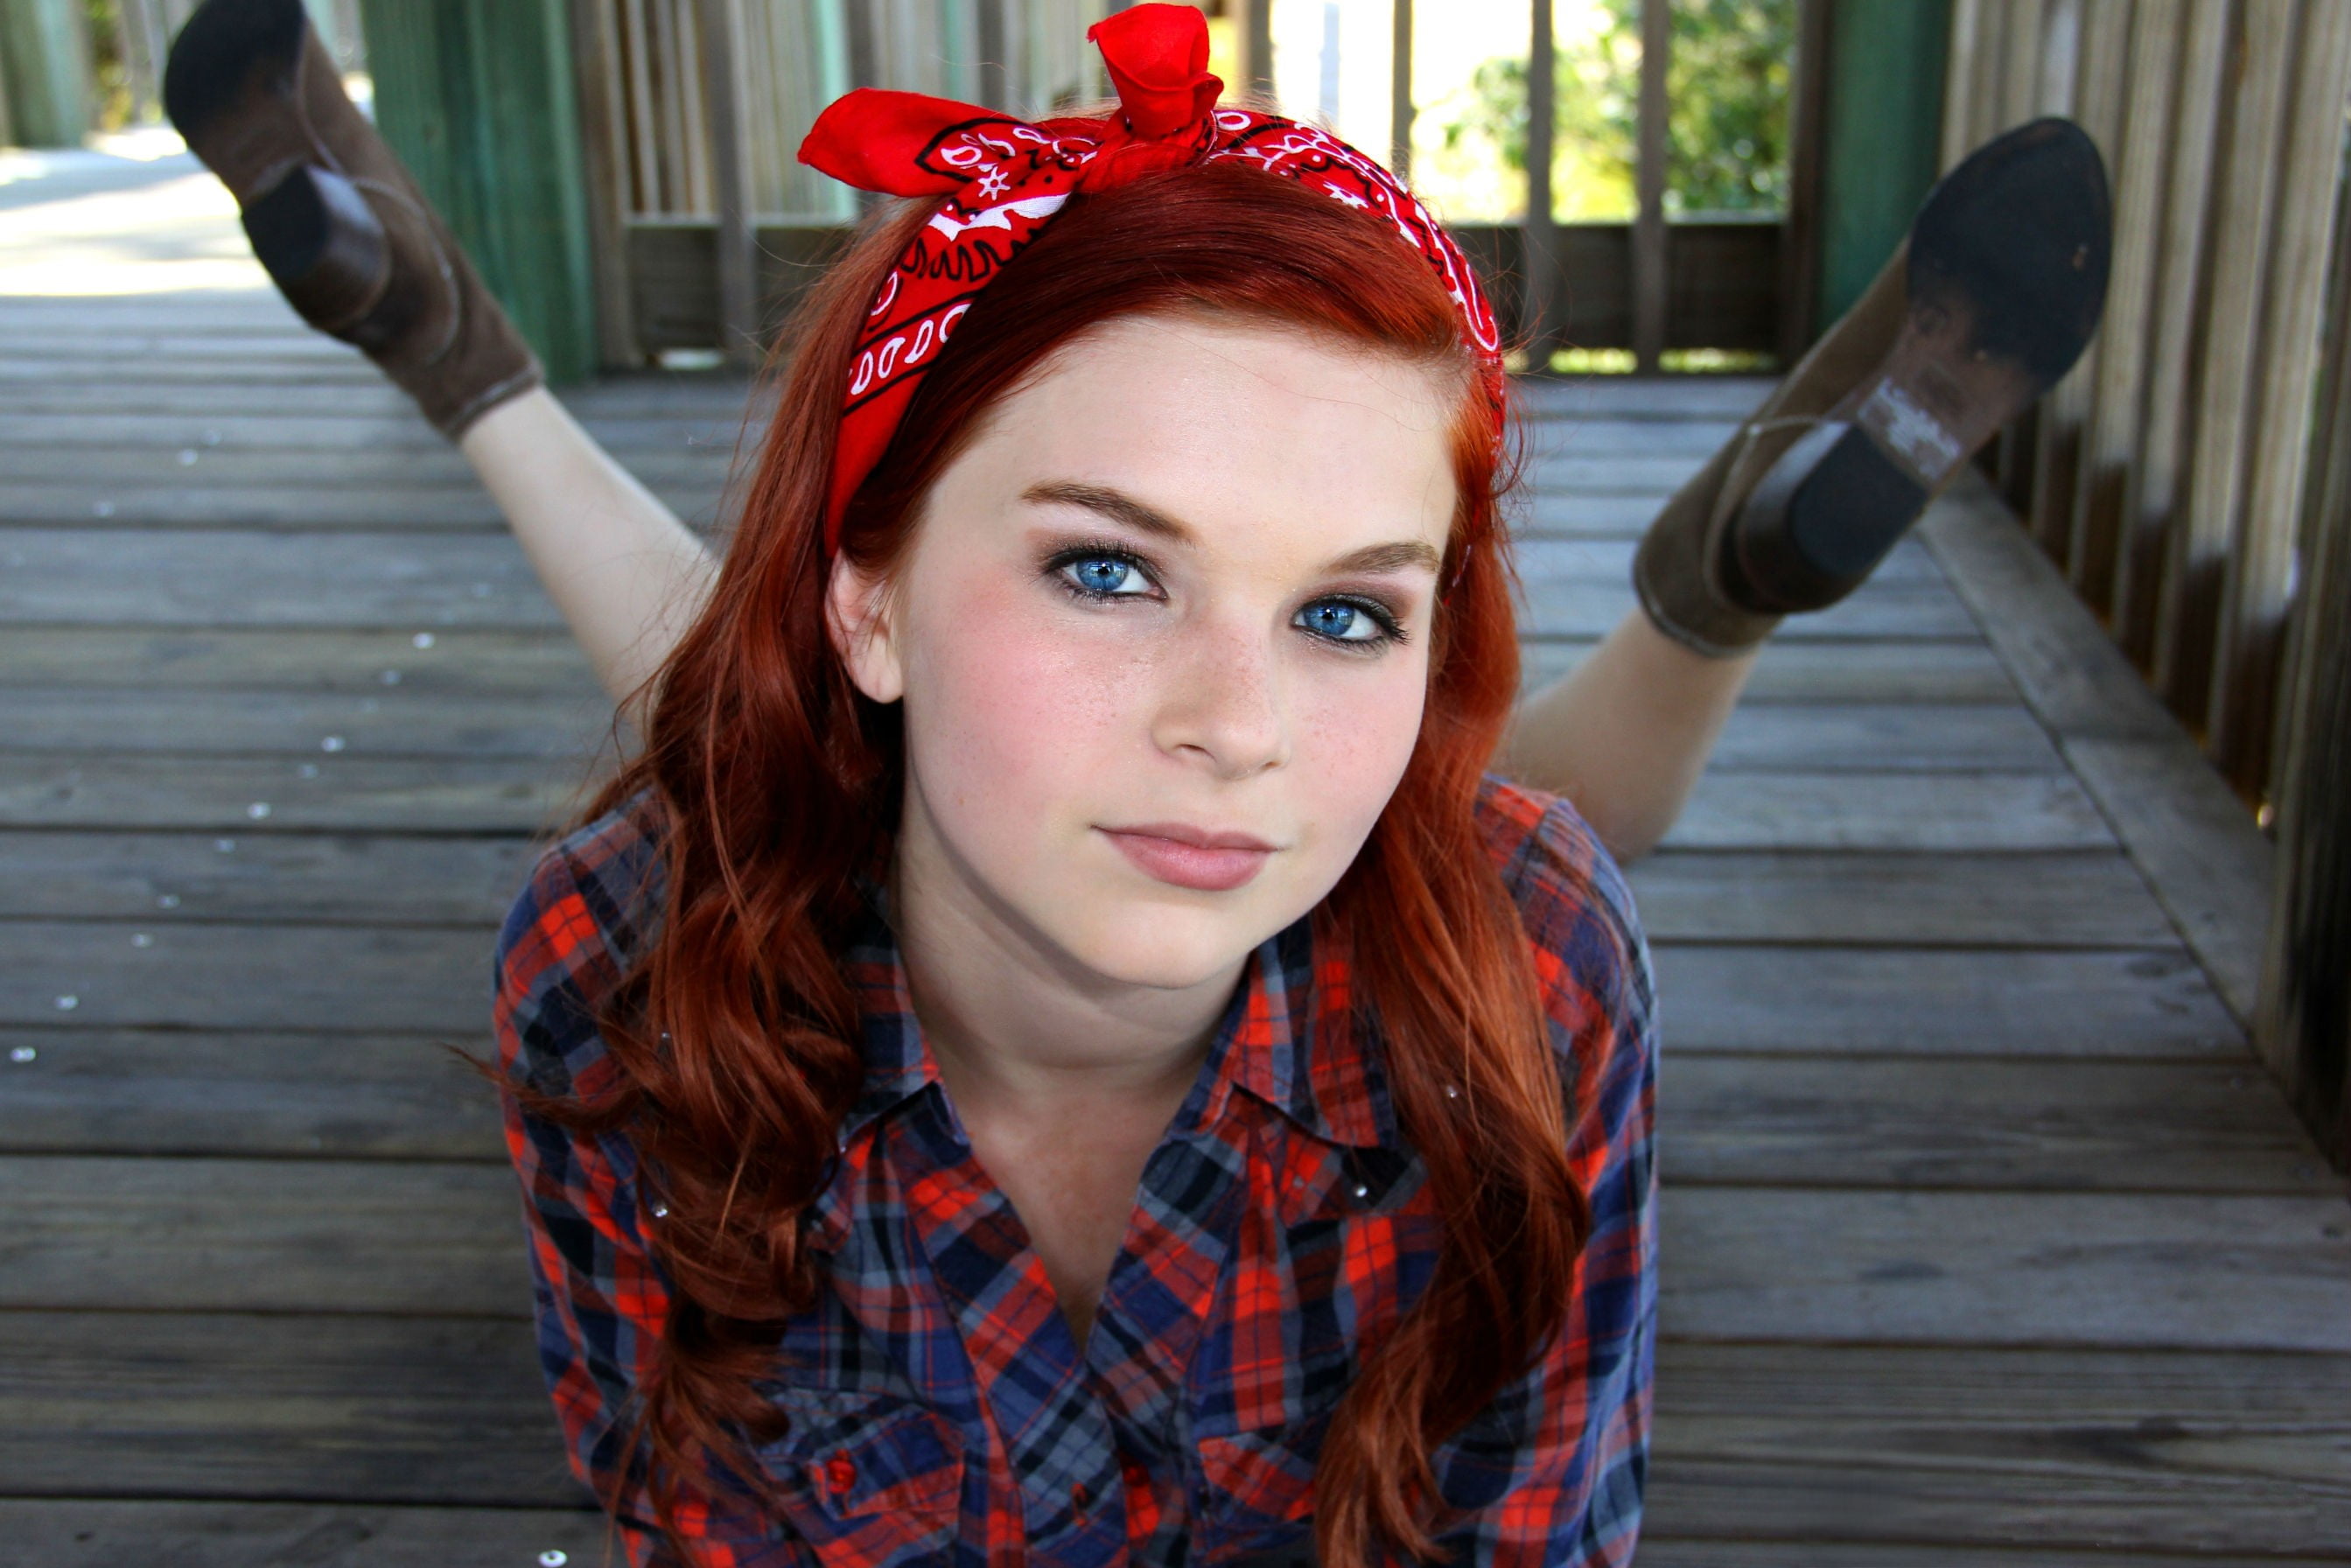 Free redhead clot pic